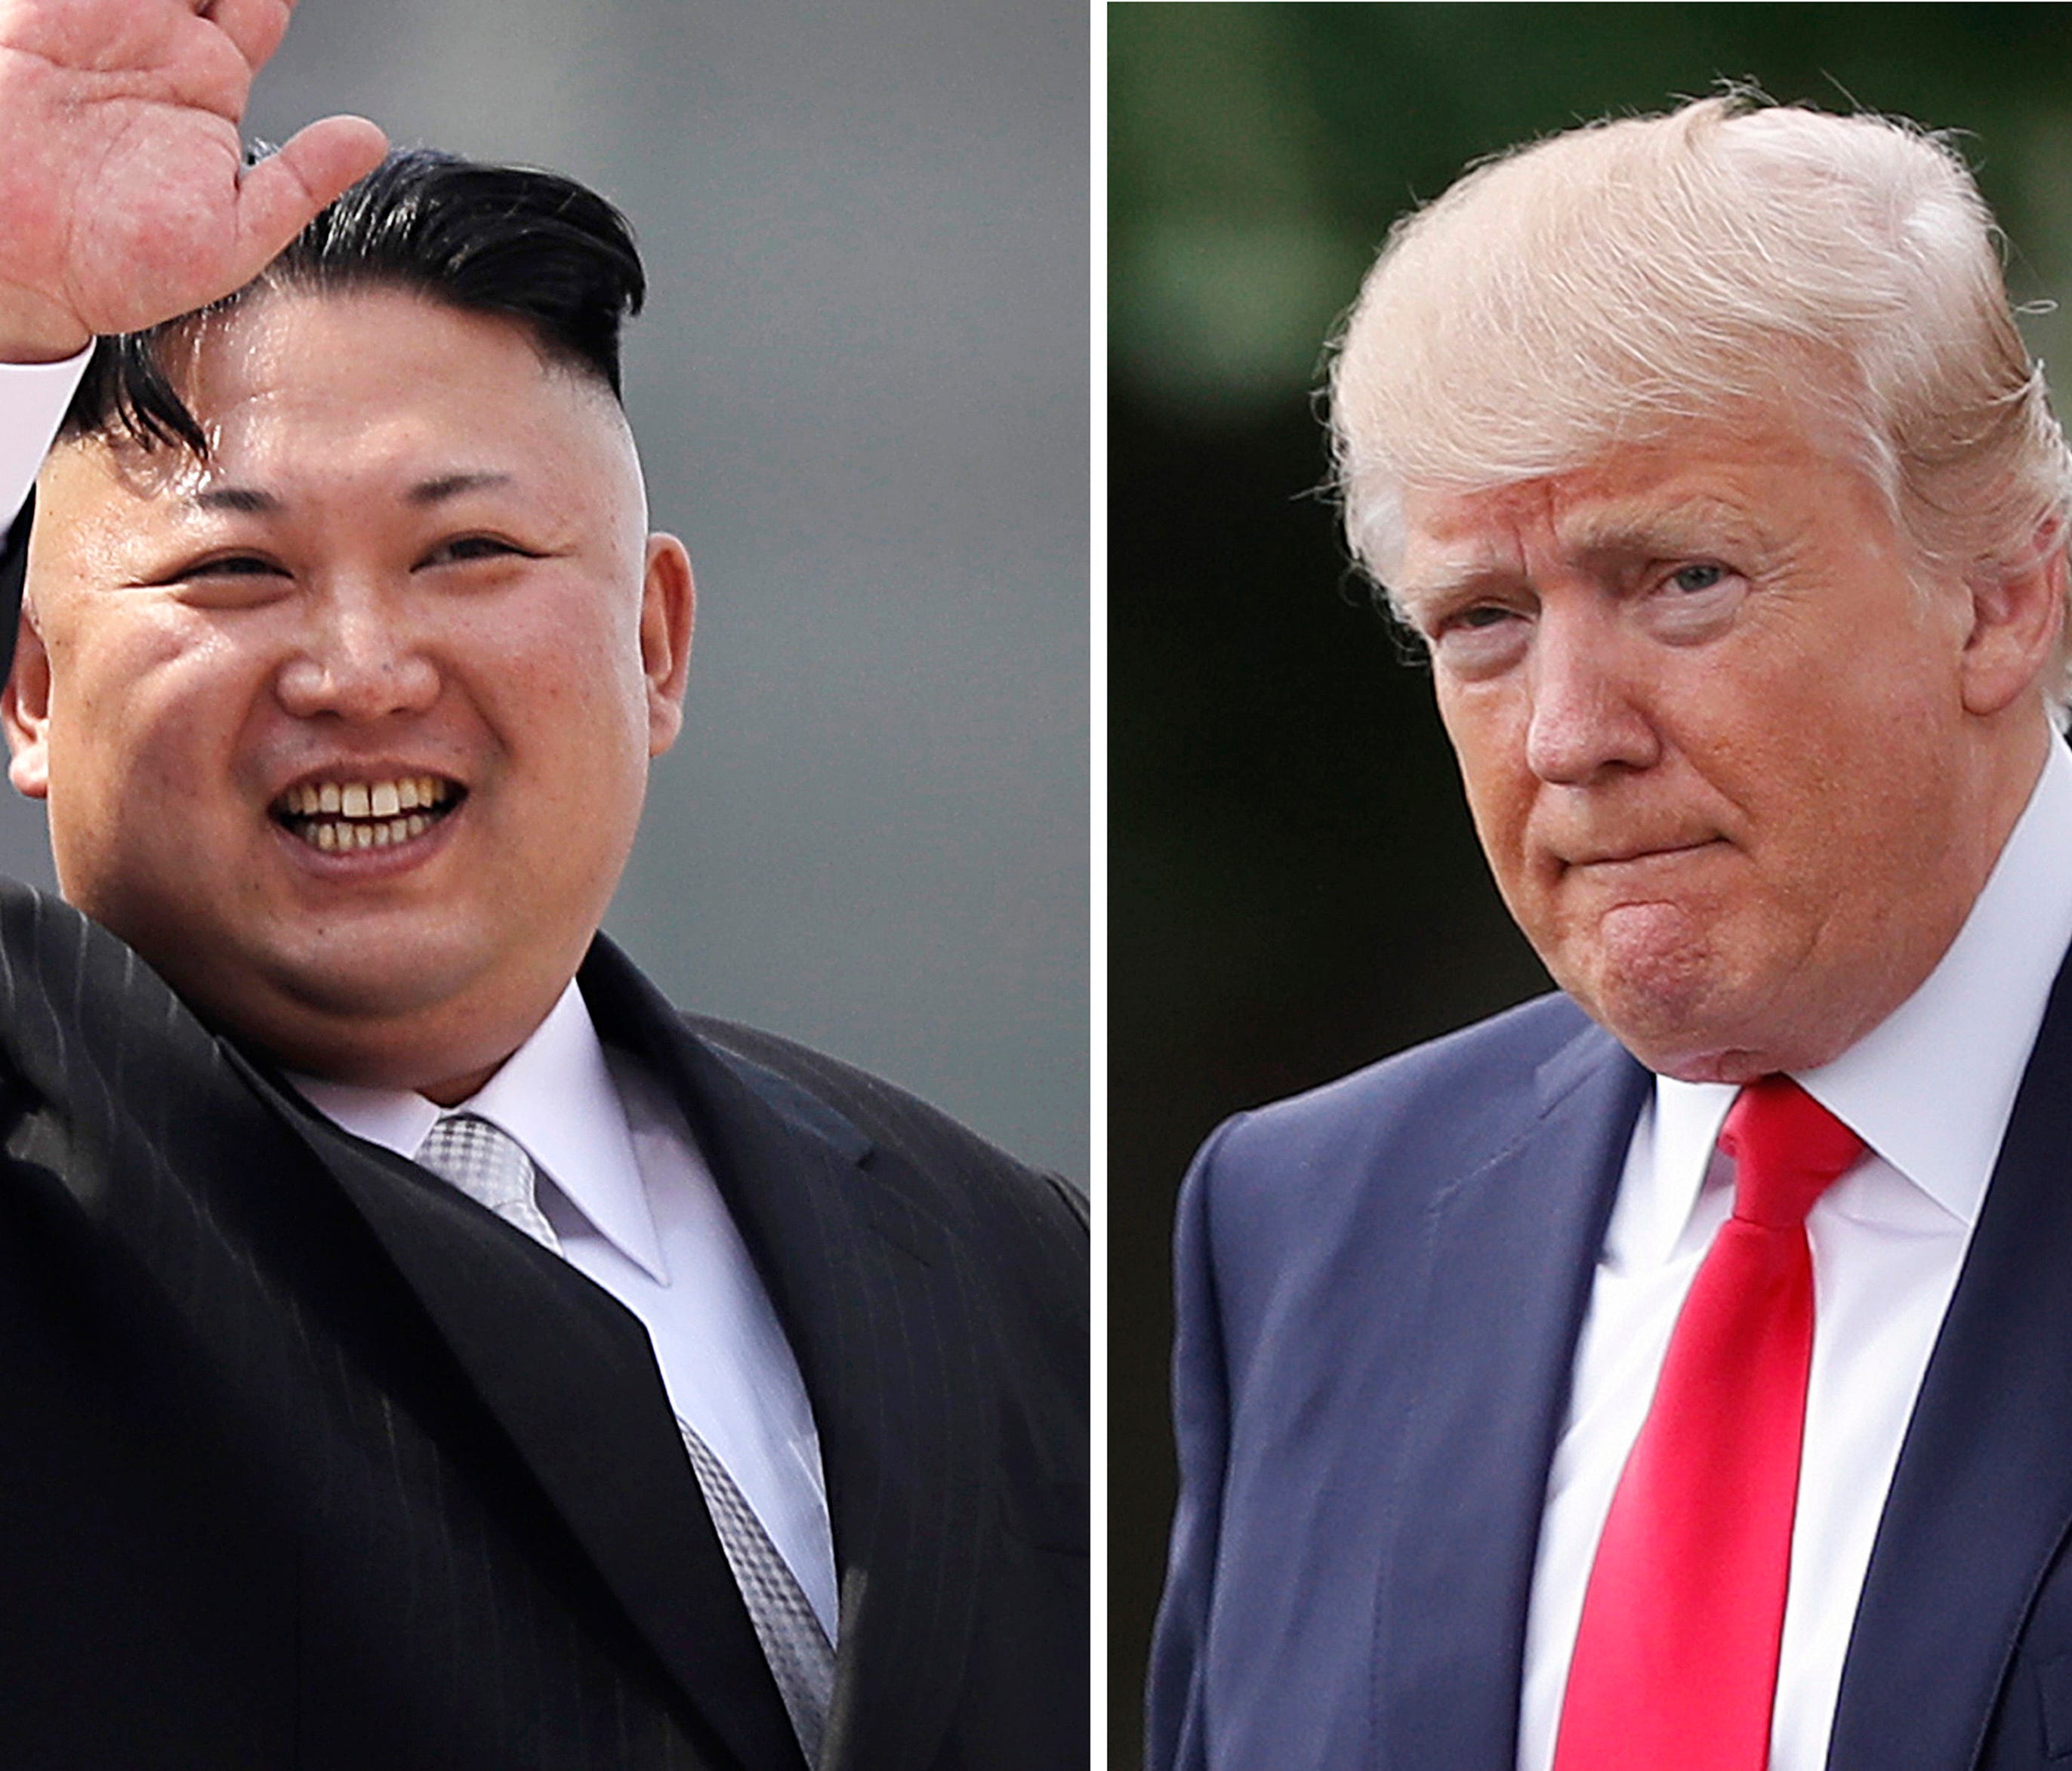 North Korean leader Kim Jong Un on April 15, 2017, in Pyongyang, North Korea, left, and President Trump in Washington on April 29, 2017.